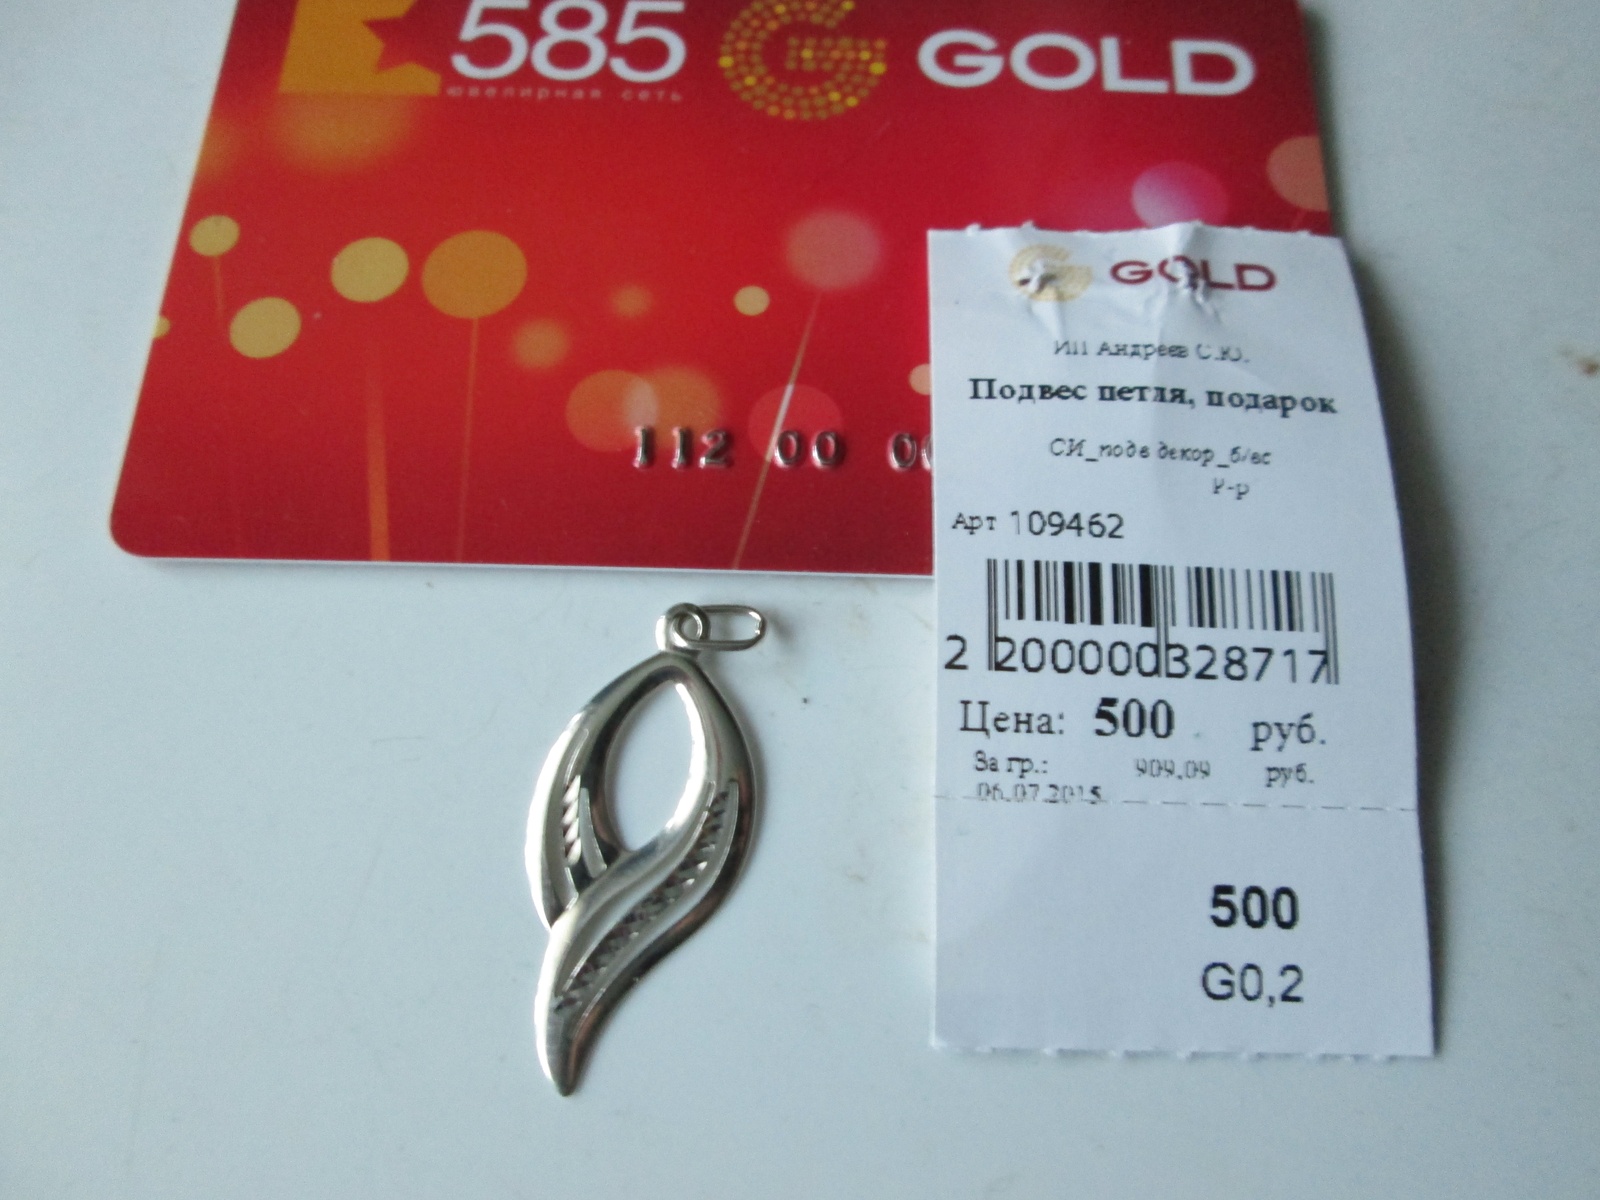 Золото 585 как выглядит. Подарок от 585 Голд. Подвеска в подарок от 585. Золото 586 магазин.